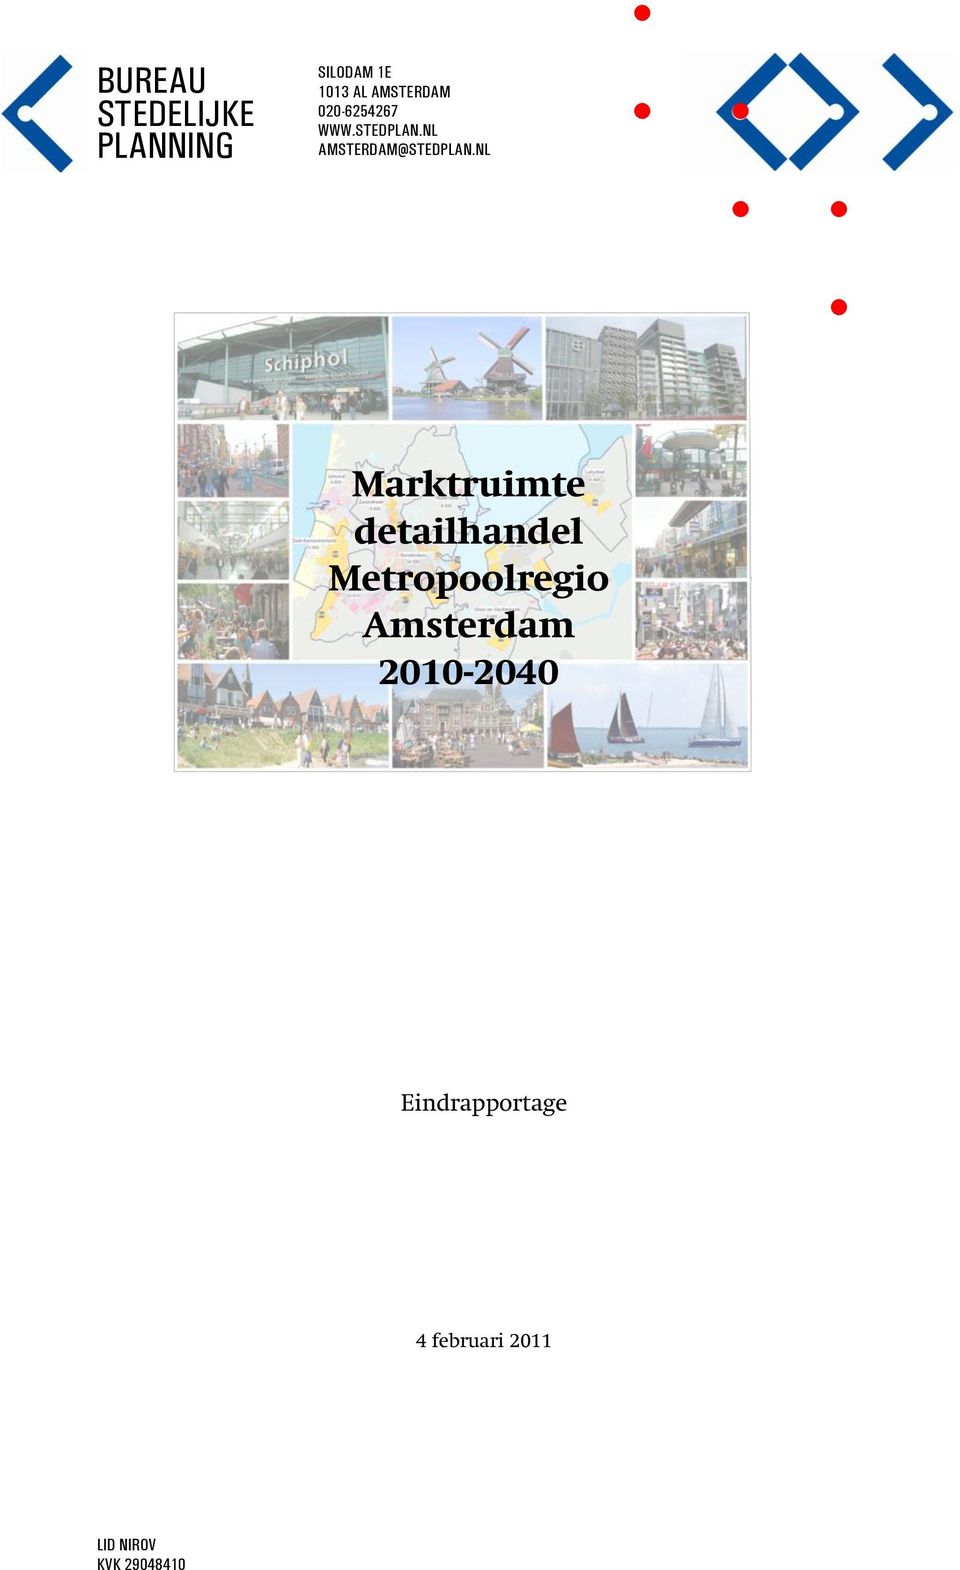 NL Marktruimte detailhandel Metropoolregio